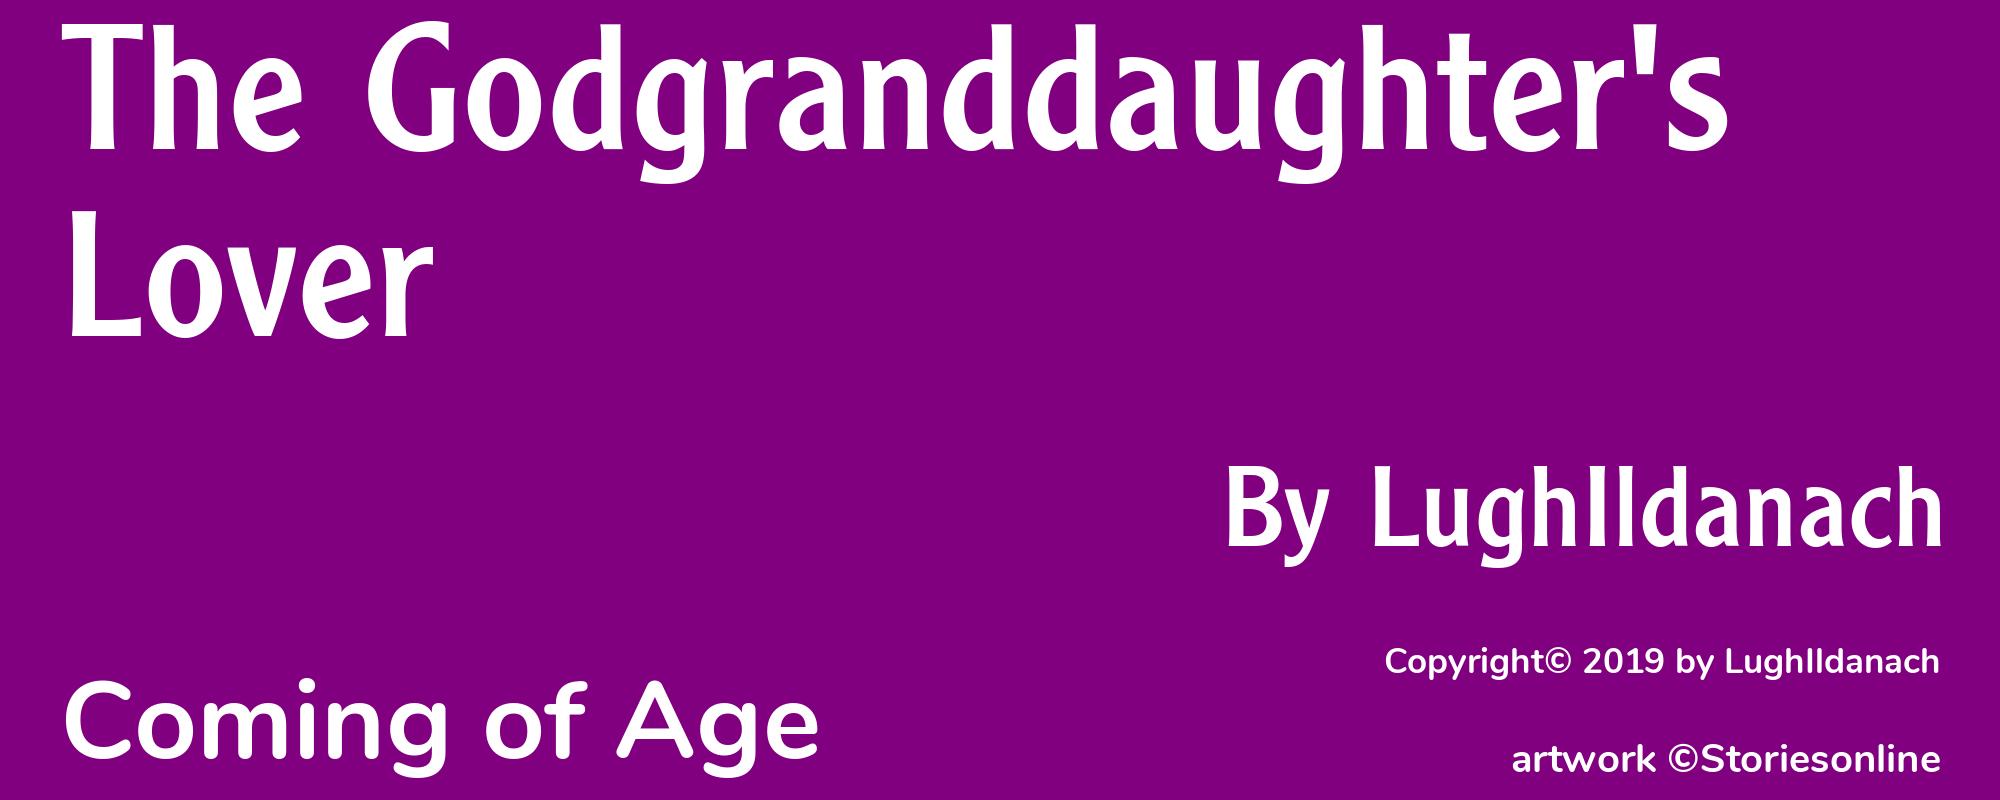 The Godgranddaughter's Lover - Cover